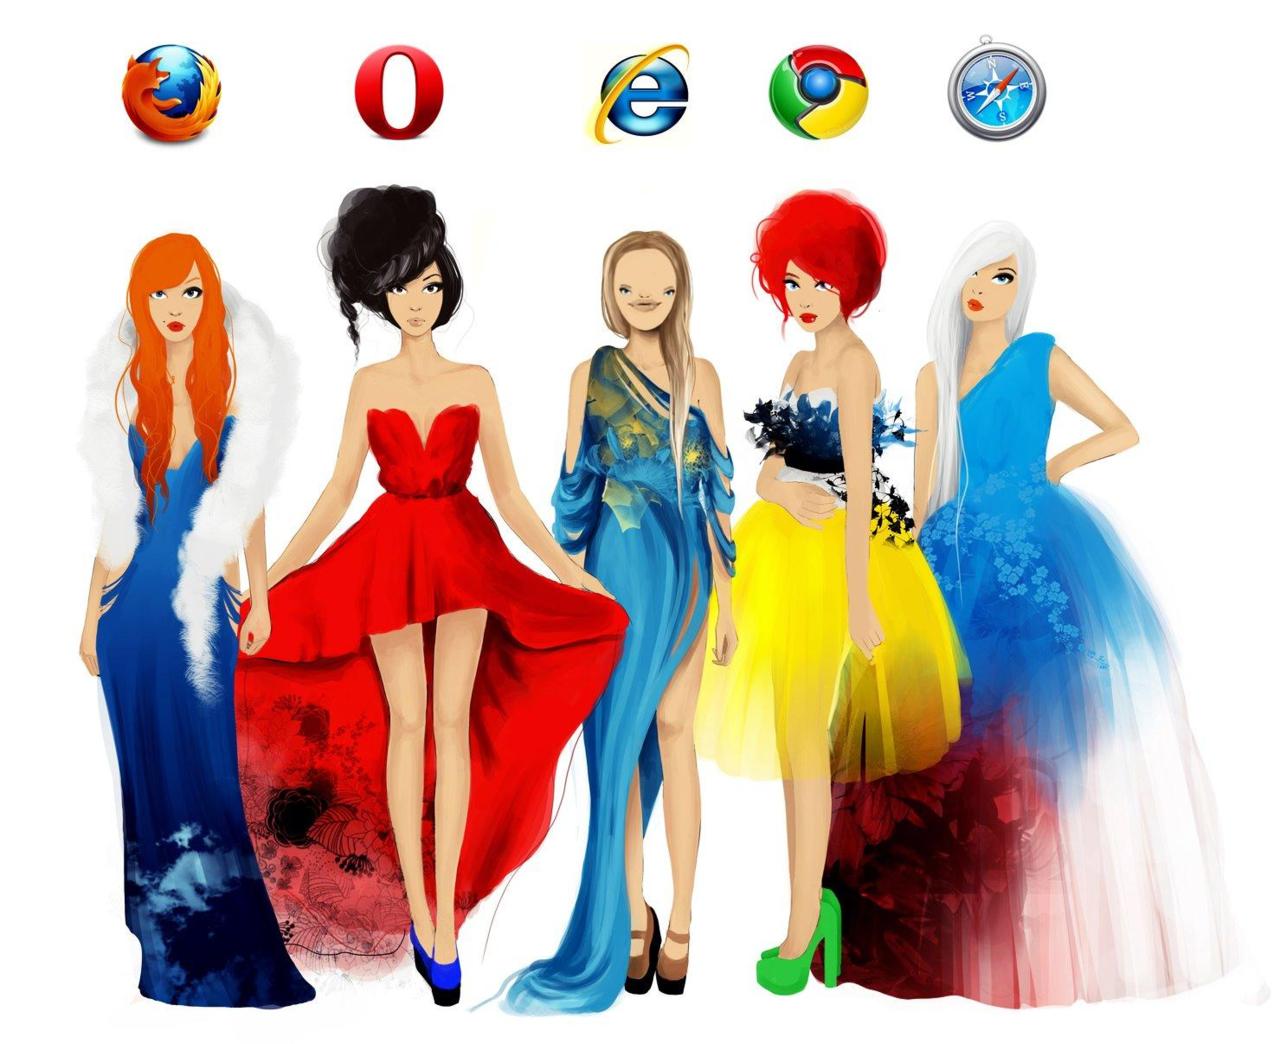 web_browser_princess_comparison.jpg